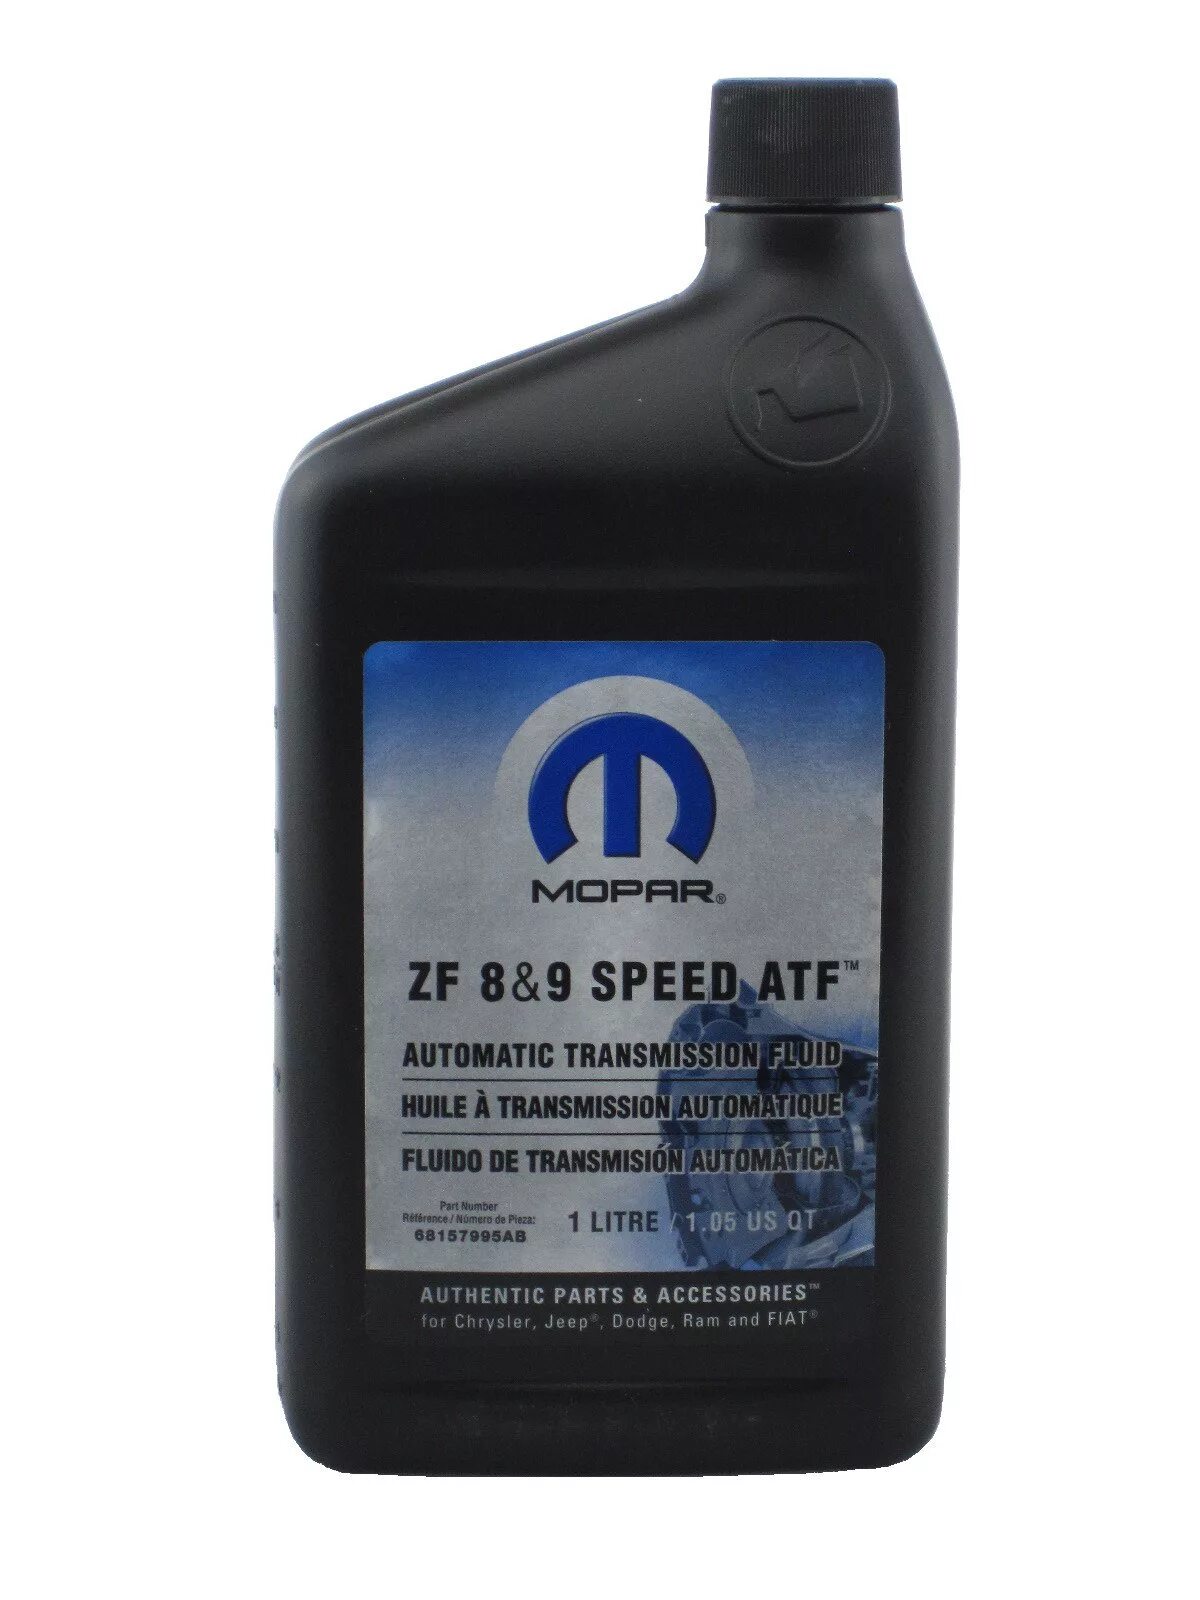 Mopar ZF 8 9 Speed ATF. Трансмиссионное масло Mopar ZF 8&9 Speed ATF. Mopar zf8&9 Speed ATF допуски Крайслера. ATF ZF Fluid 8 оригинал отличия.